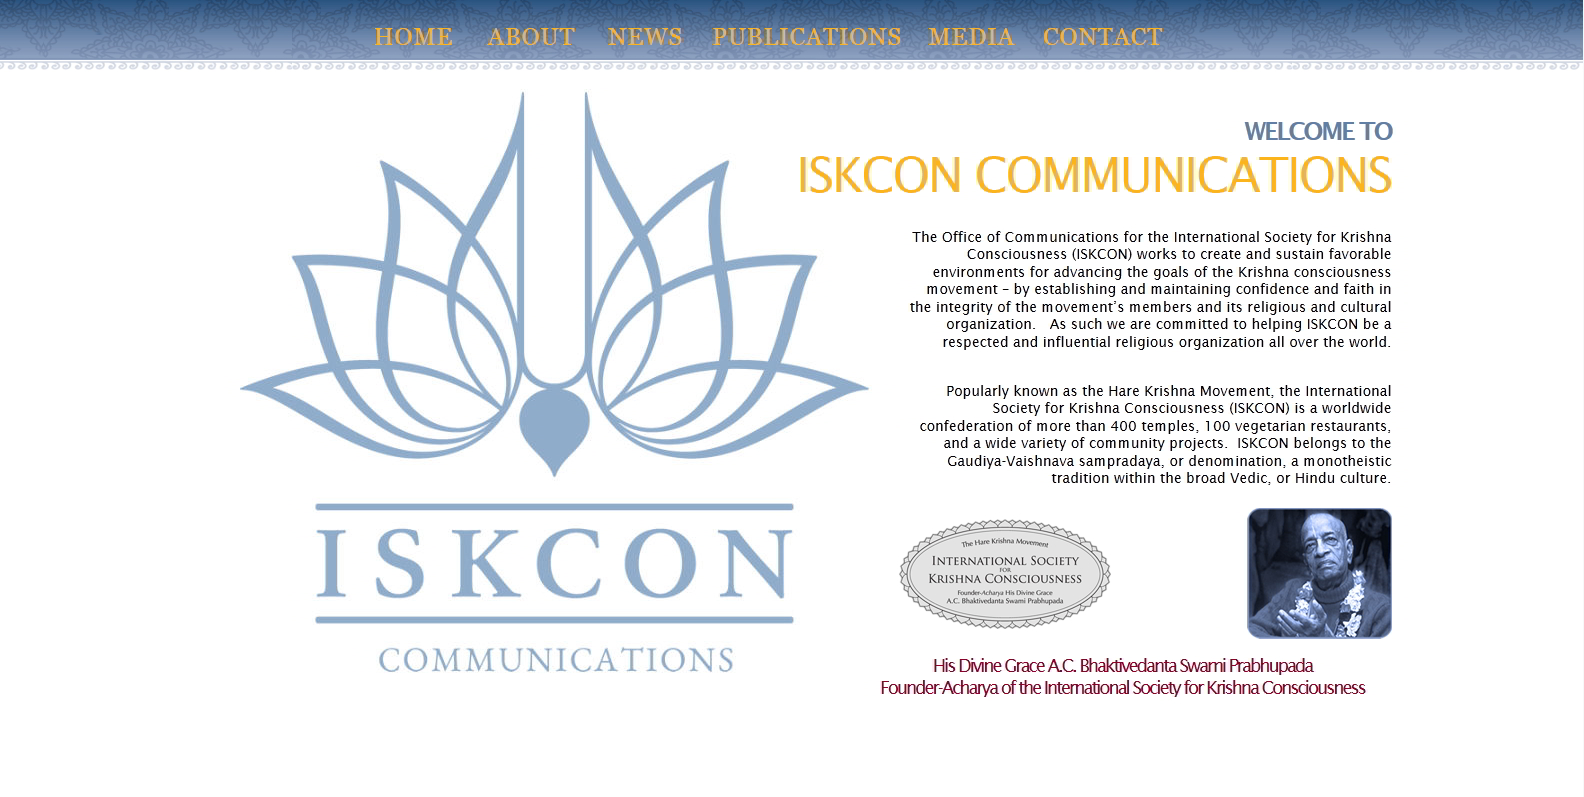 The ISKCON Communications homepage